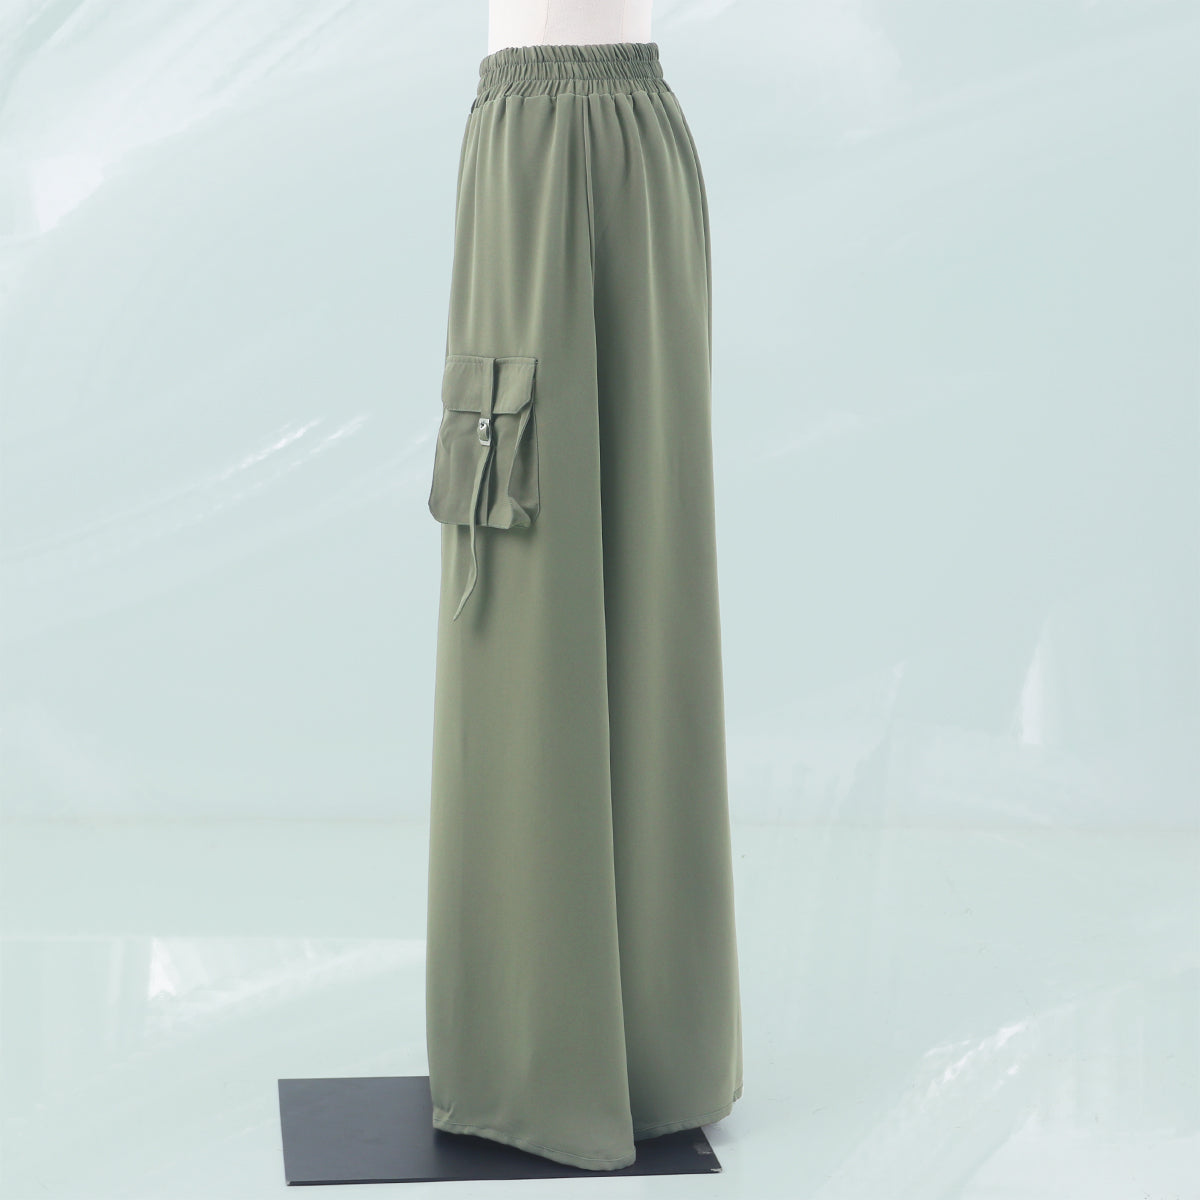 Nabila Skirt - Sage Green